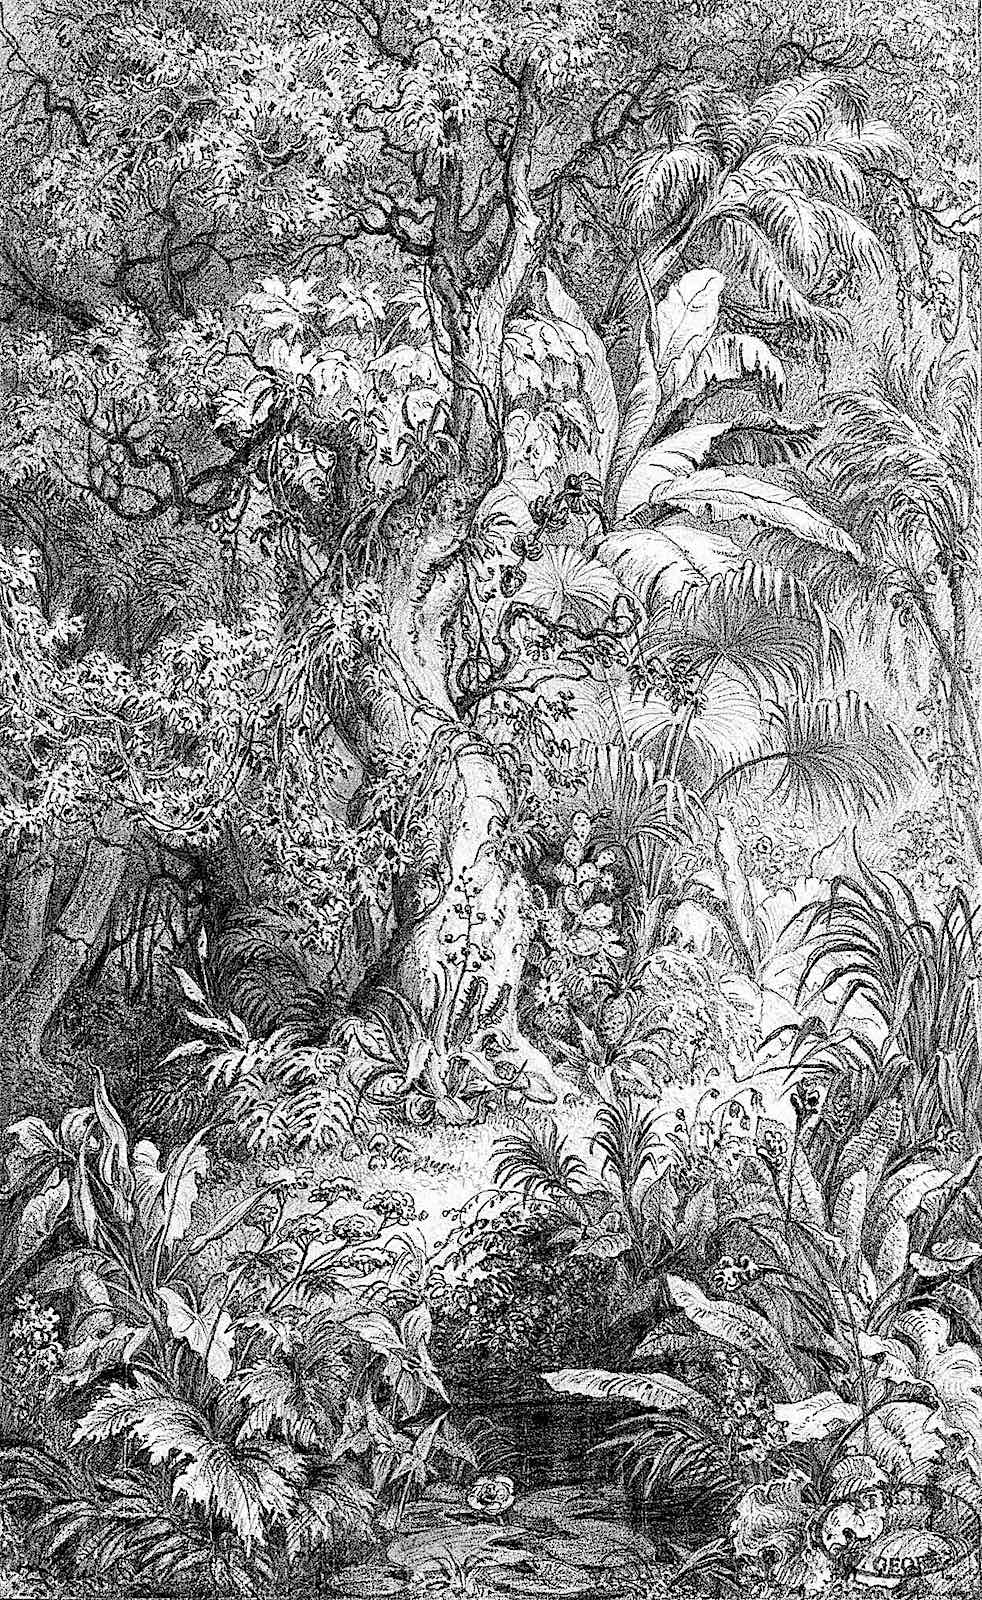 a Wilhelm Georgy illustration 1800s, jungle foliage